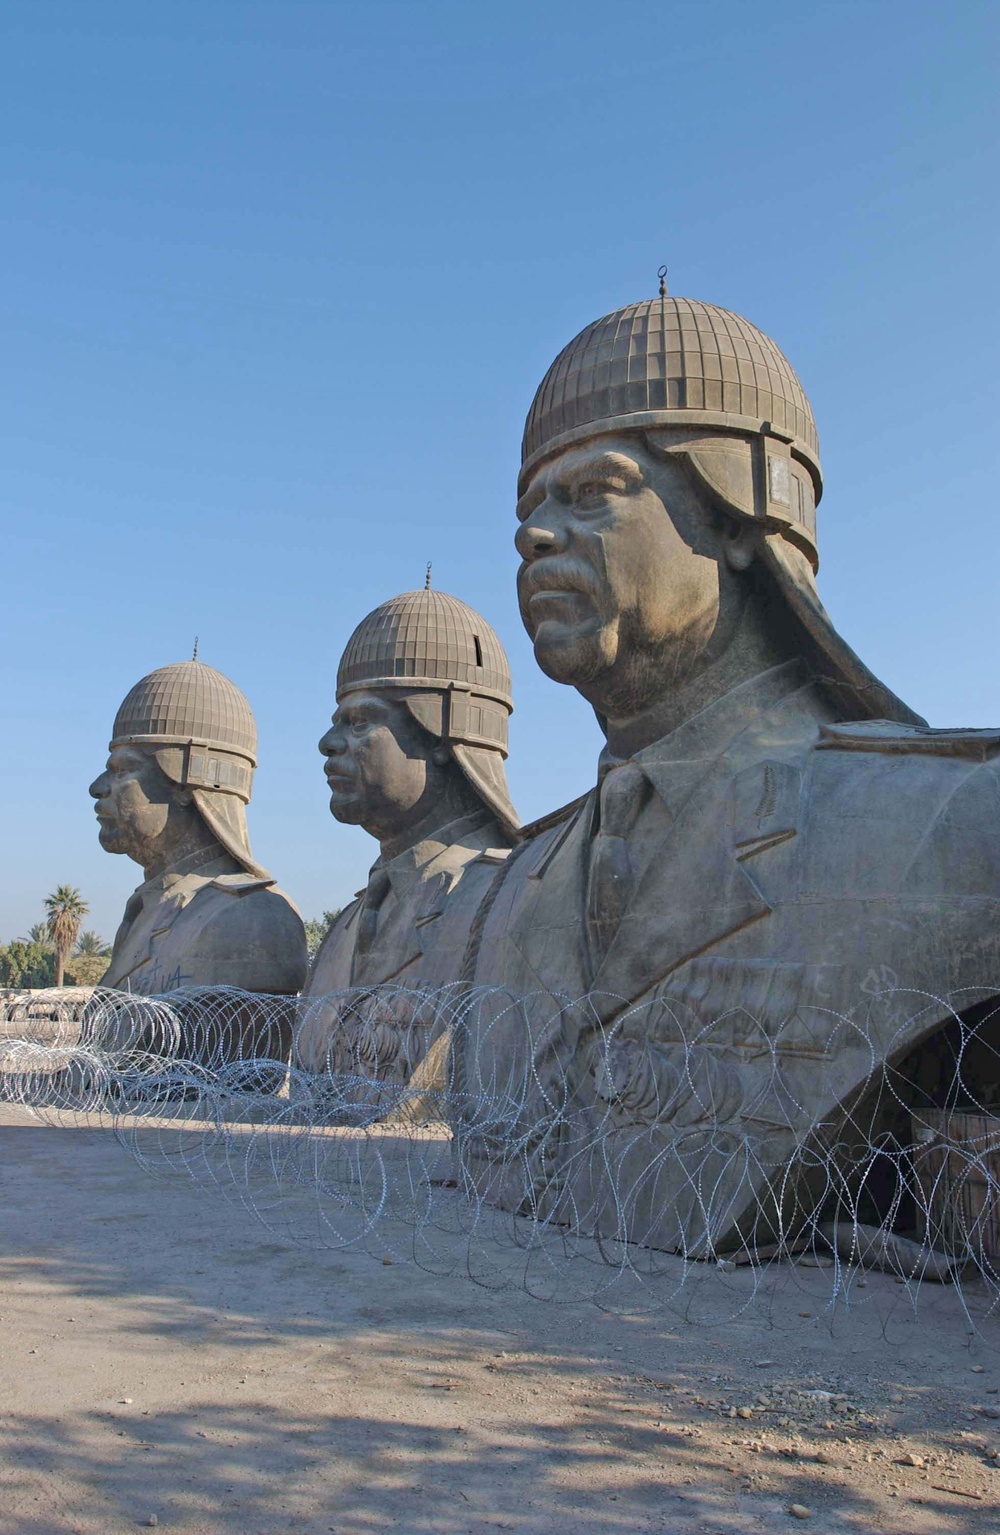 Three statues of Saddam Hussein